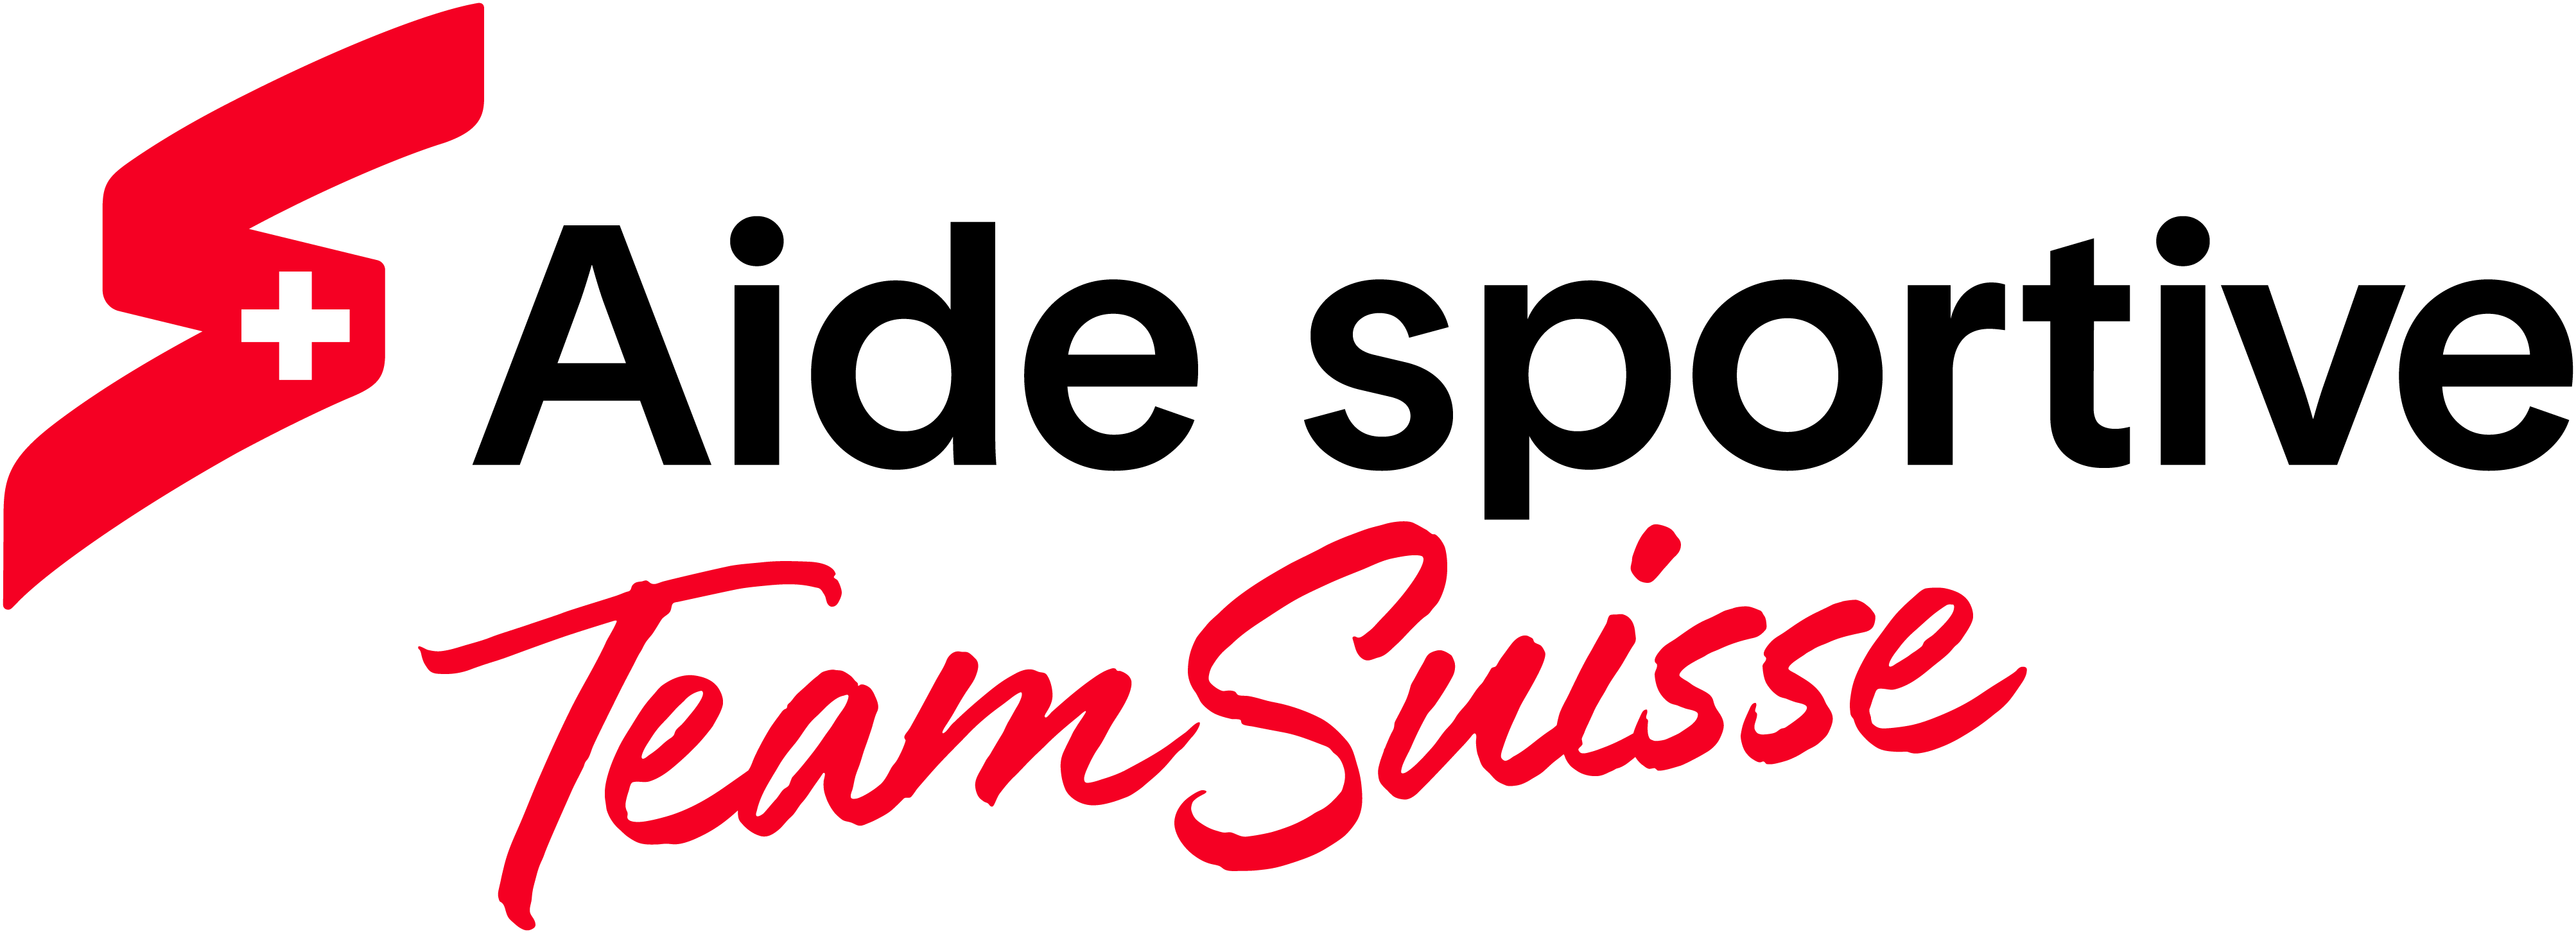 Sporthilfe Logo Teamsuisse FR RGB